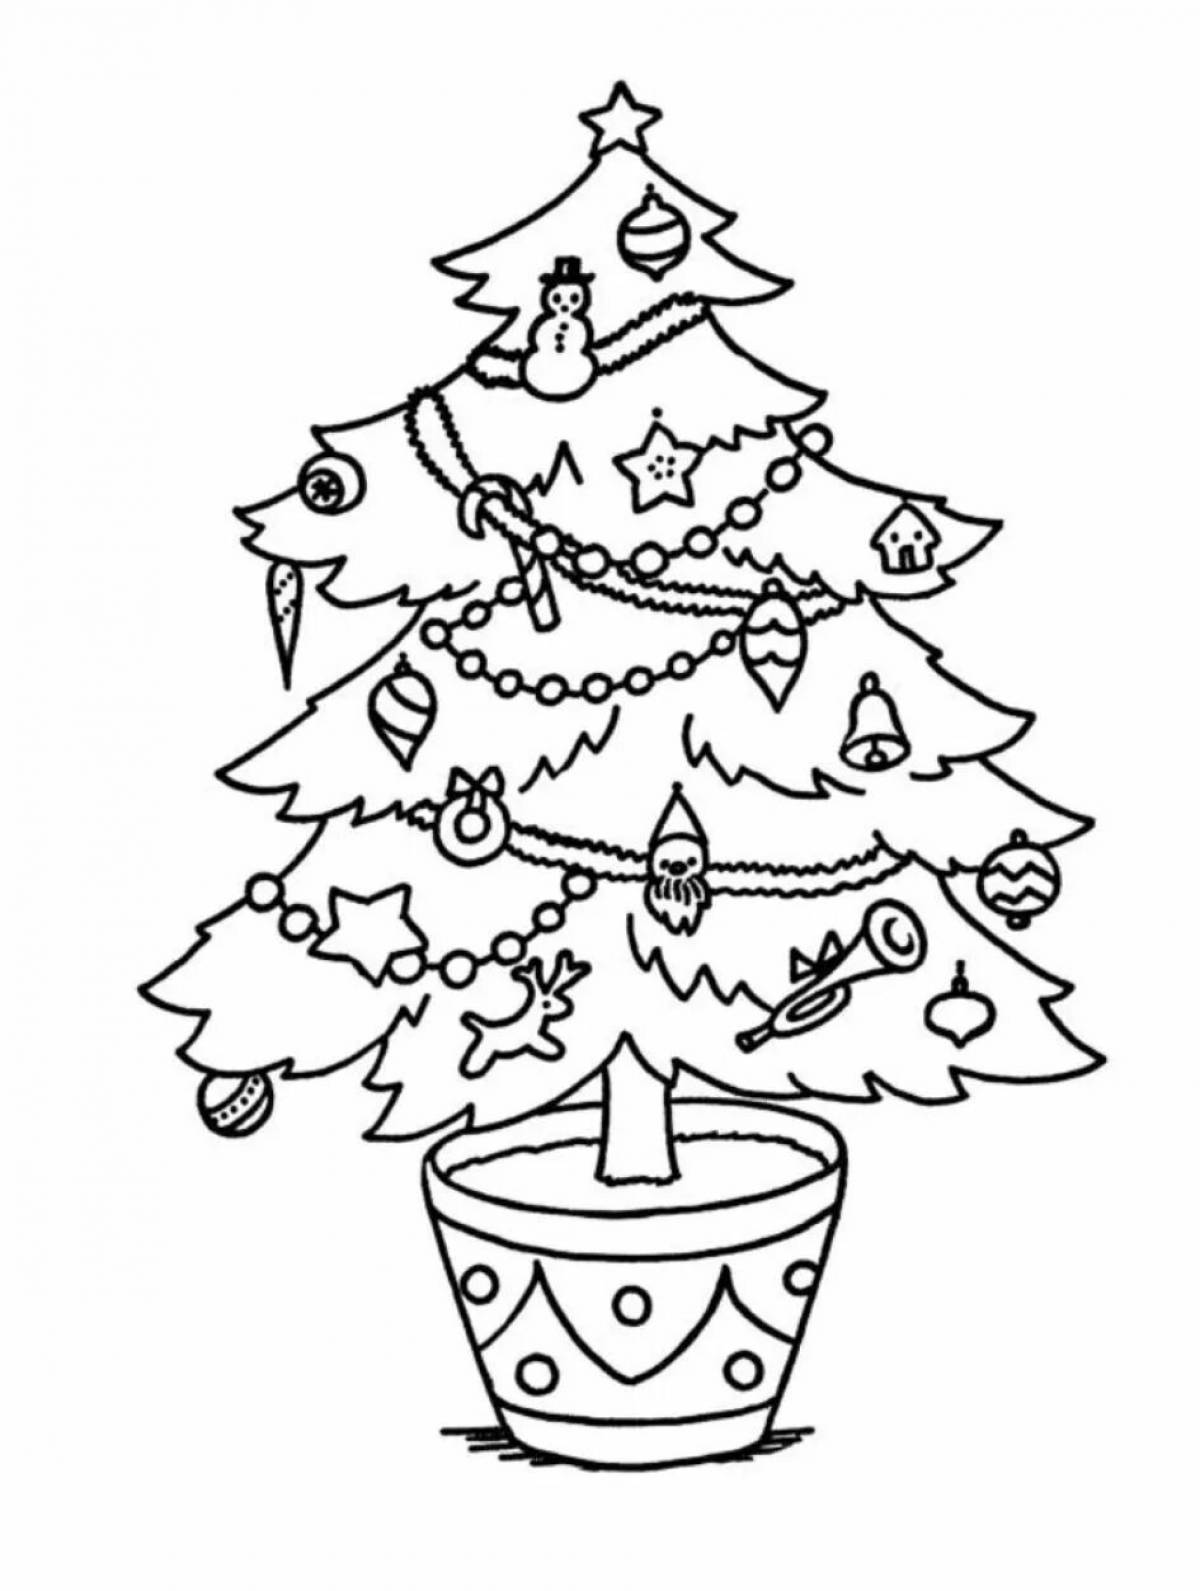 Christmas tree #13